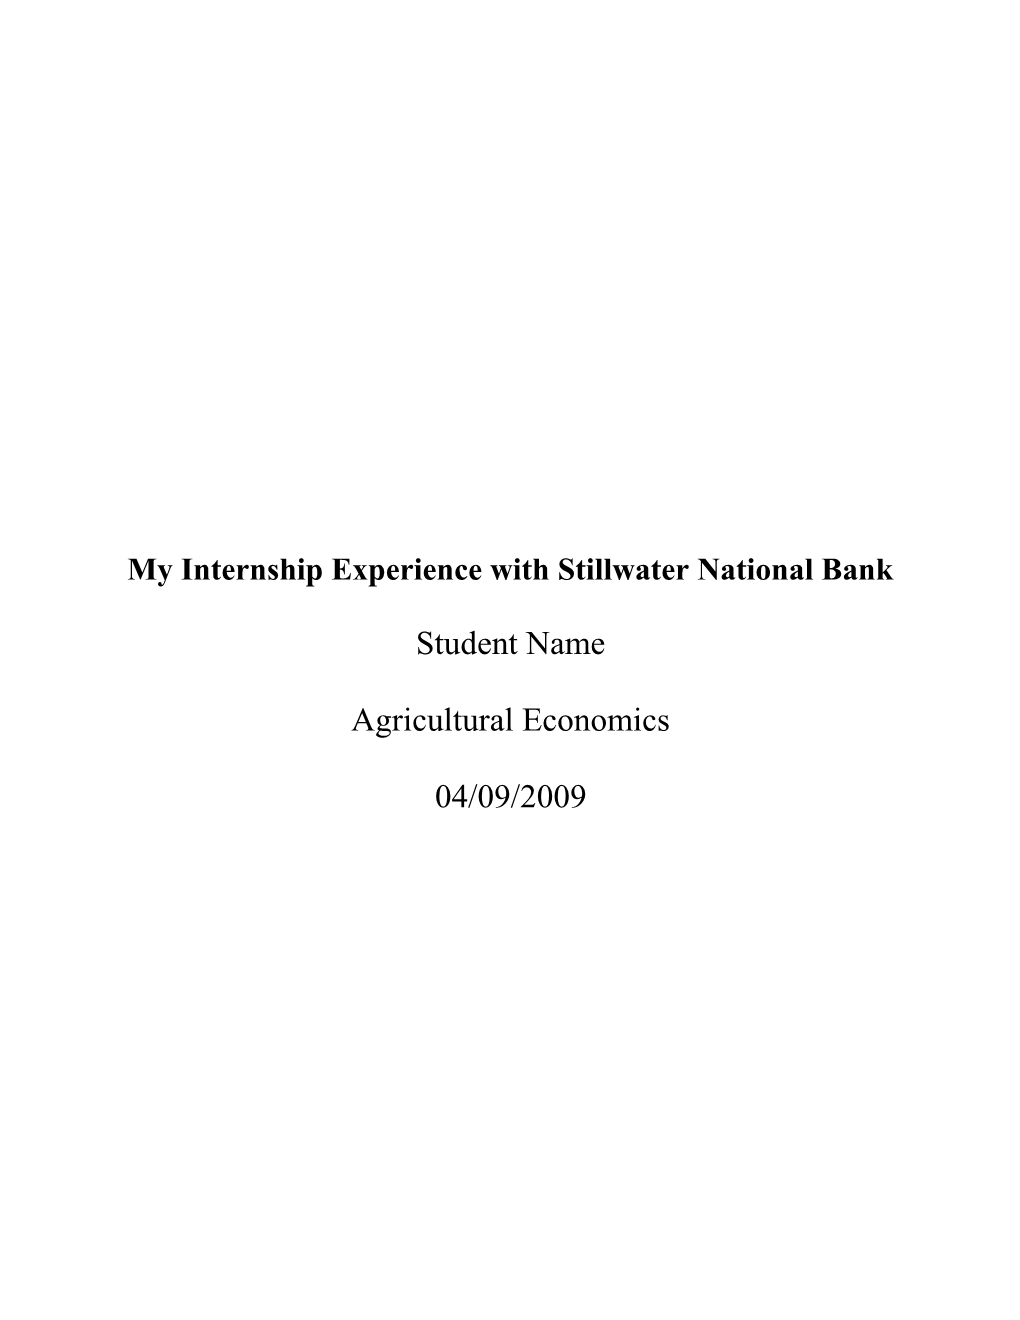 My Internship Experience with Stillwater National Bank